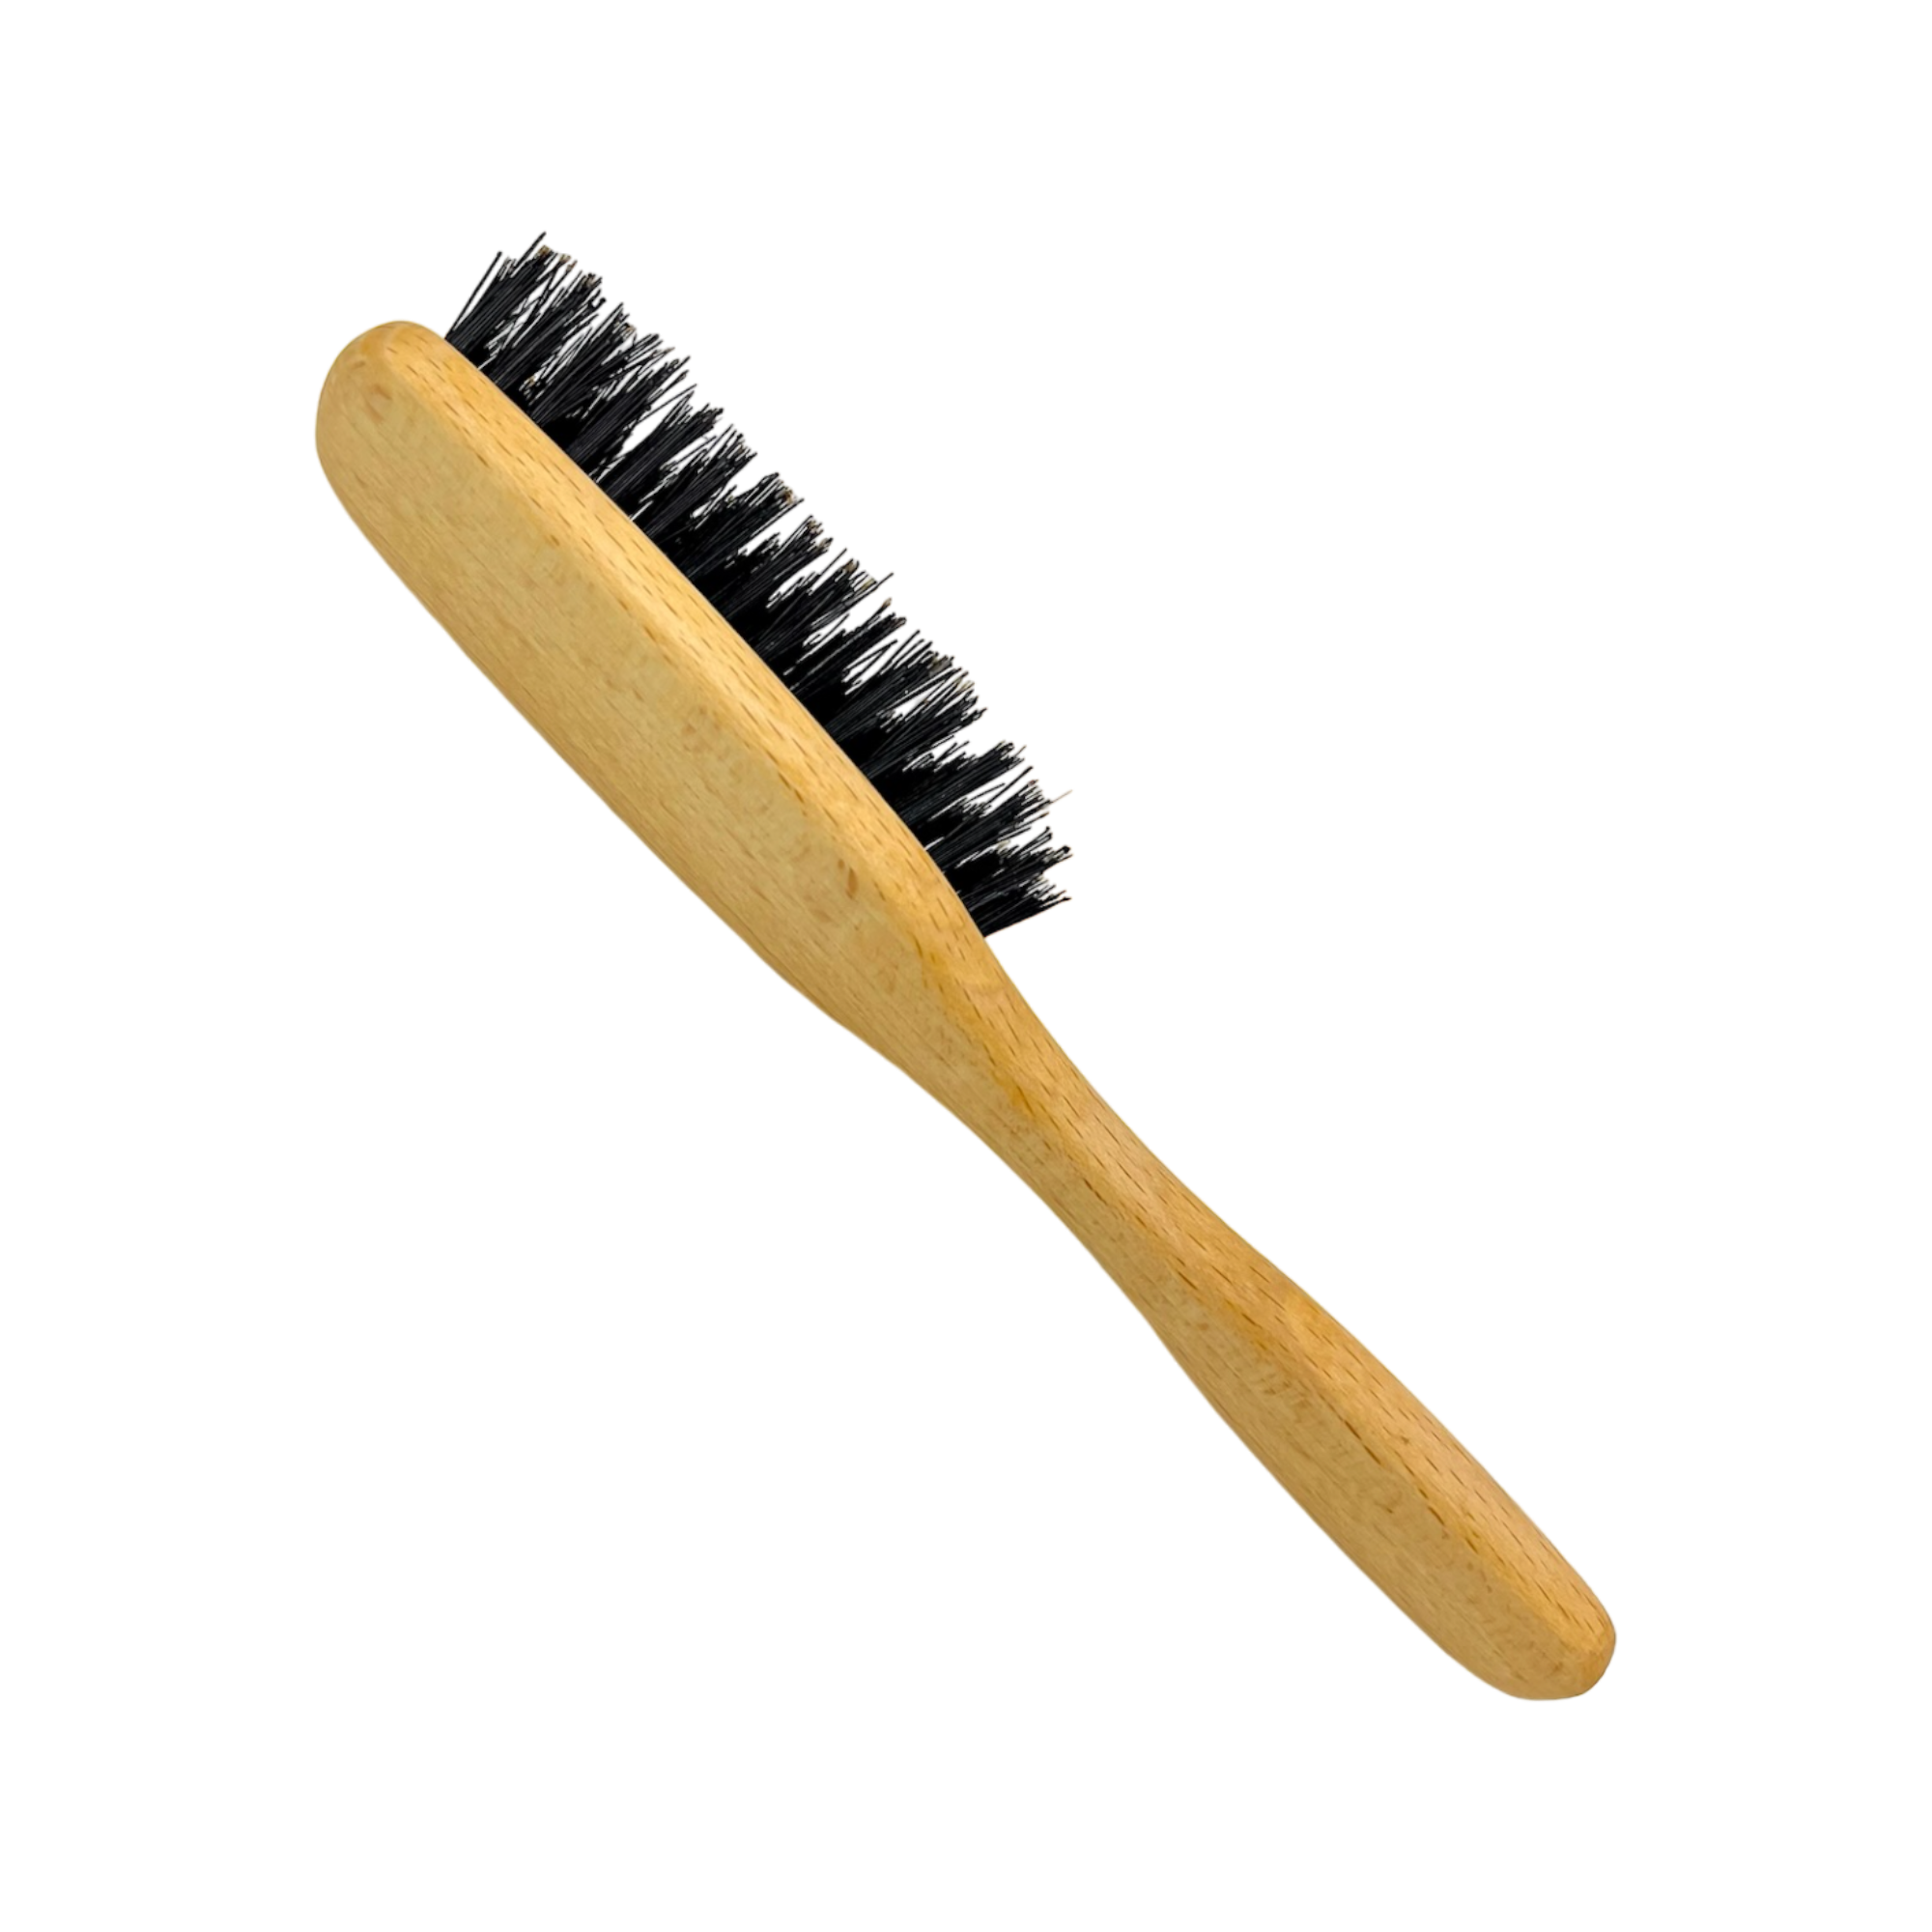 Dural Beech wood hair brush with boar bristles - 5 rows